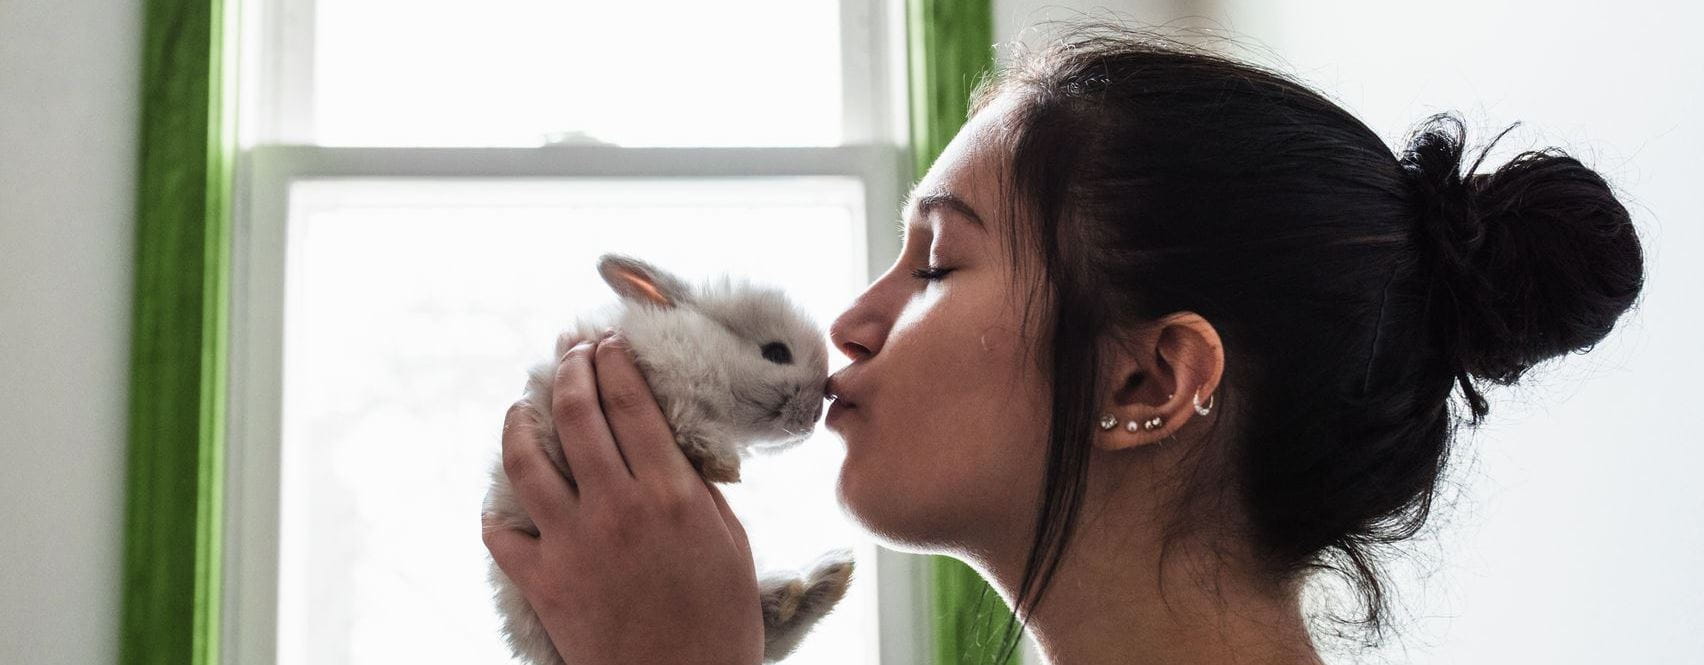 Woman kissing bunny rabbit